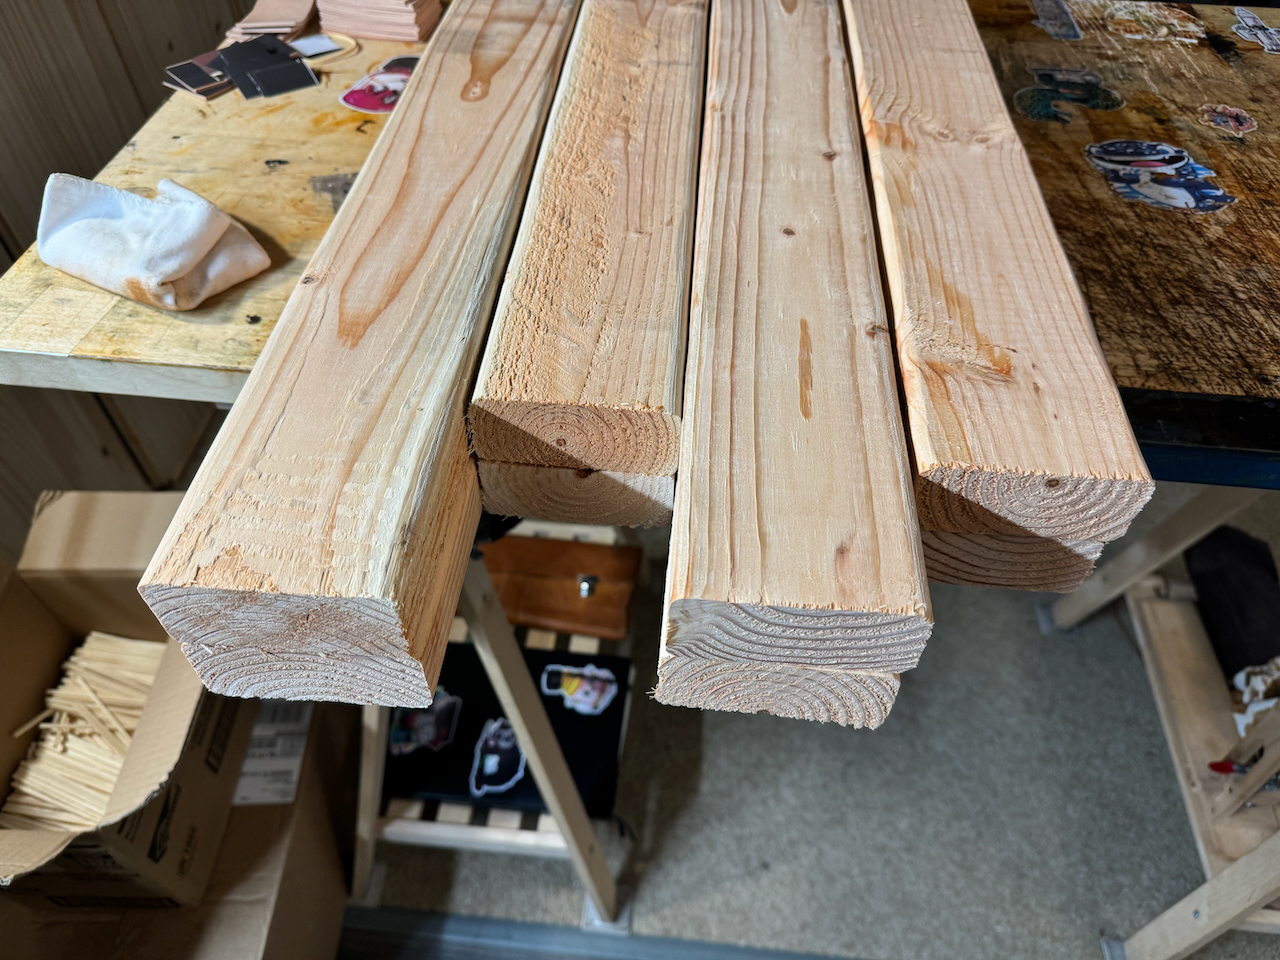 stacked lumber